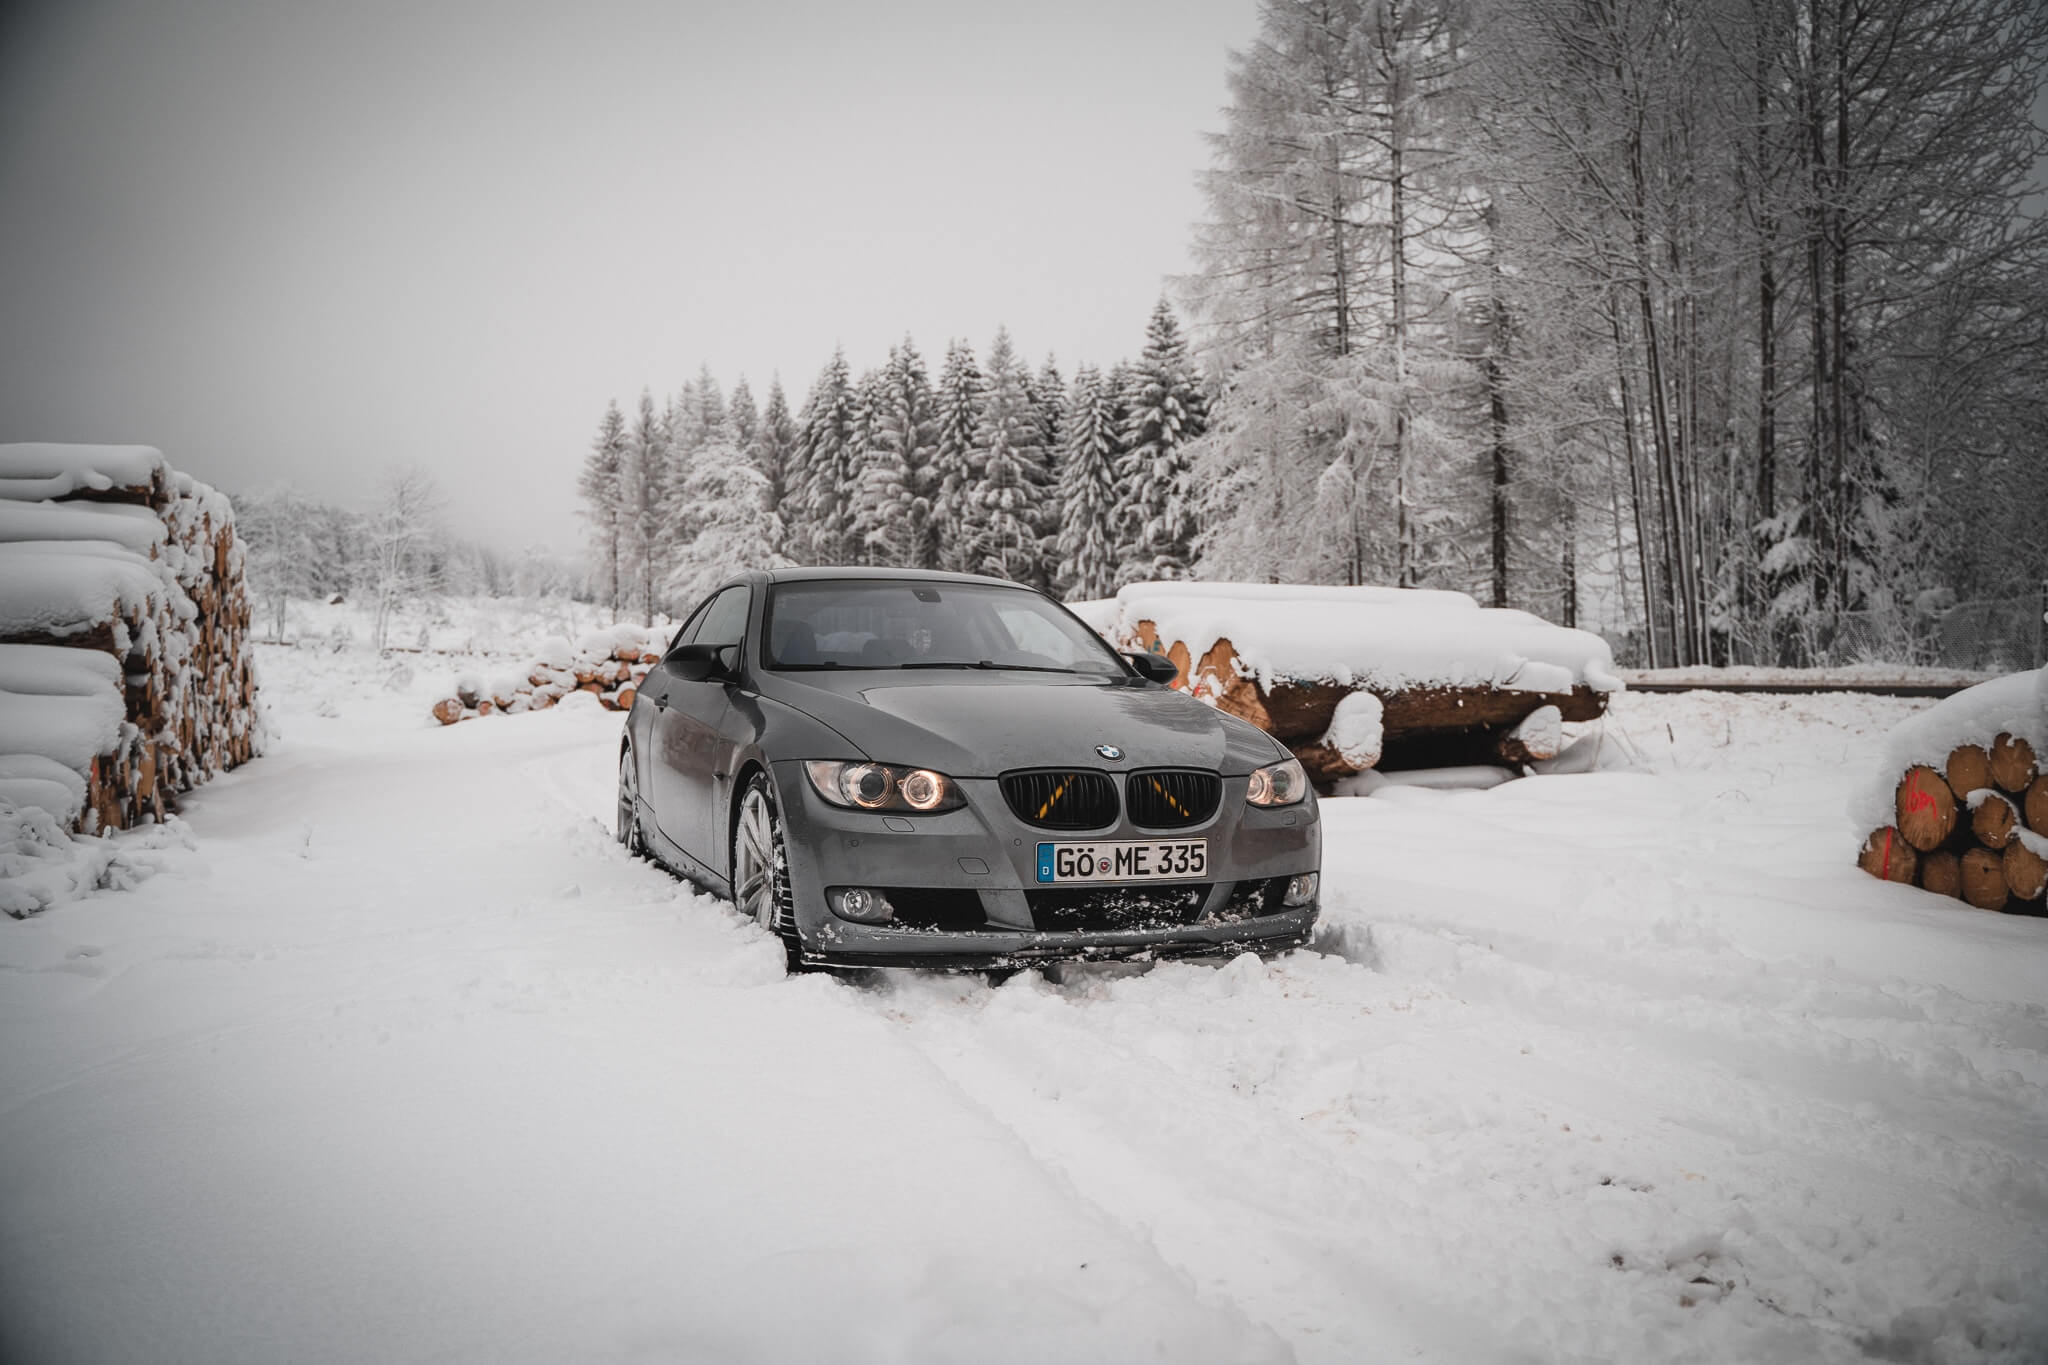 https://usercontent.one/wp/www.pascalweisse.de/wp-content/uploads/2021/02/BMW-335i-Schnee-Wallpaper-Harz7.jpg